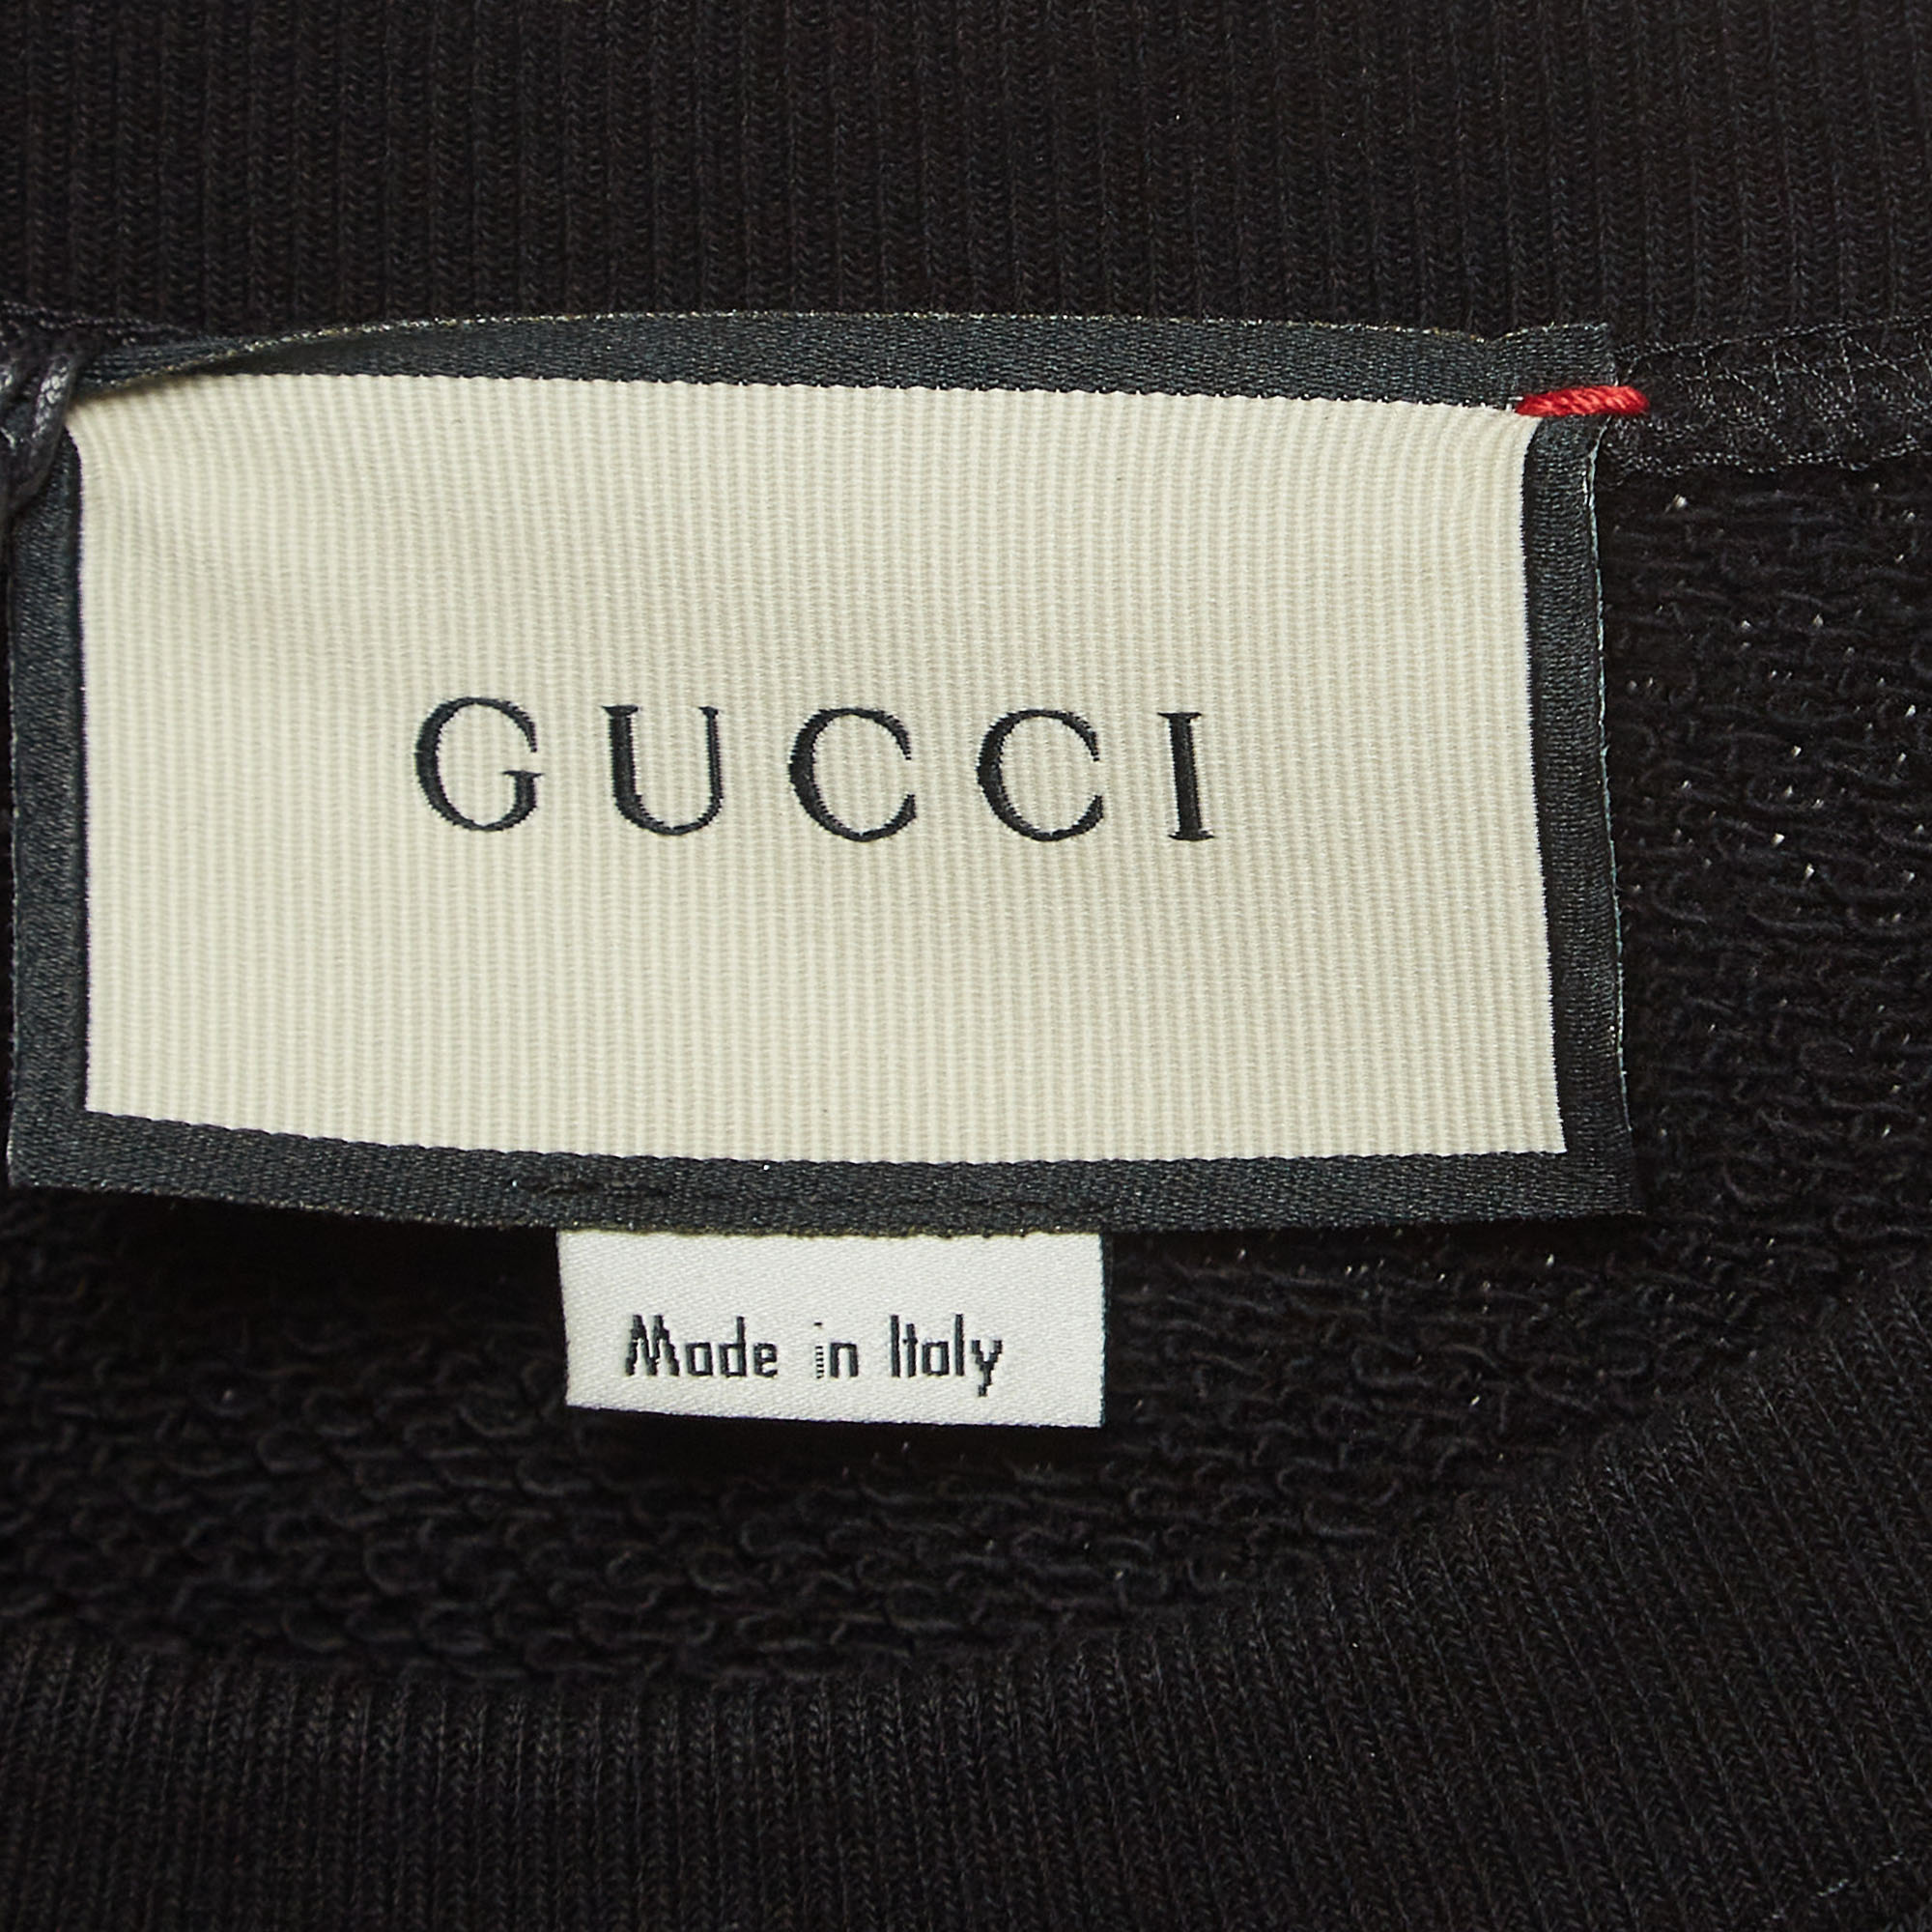 Gucci Black Cotton Dagger Heart Embroidered Sweatshirt S